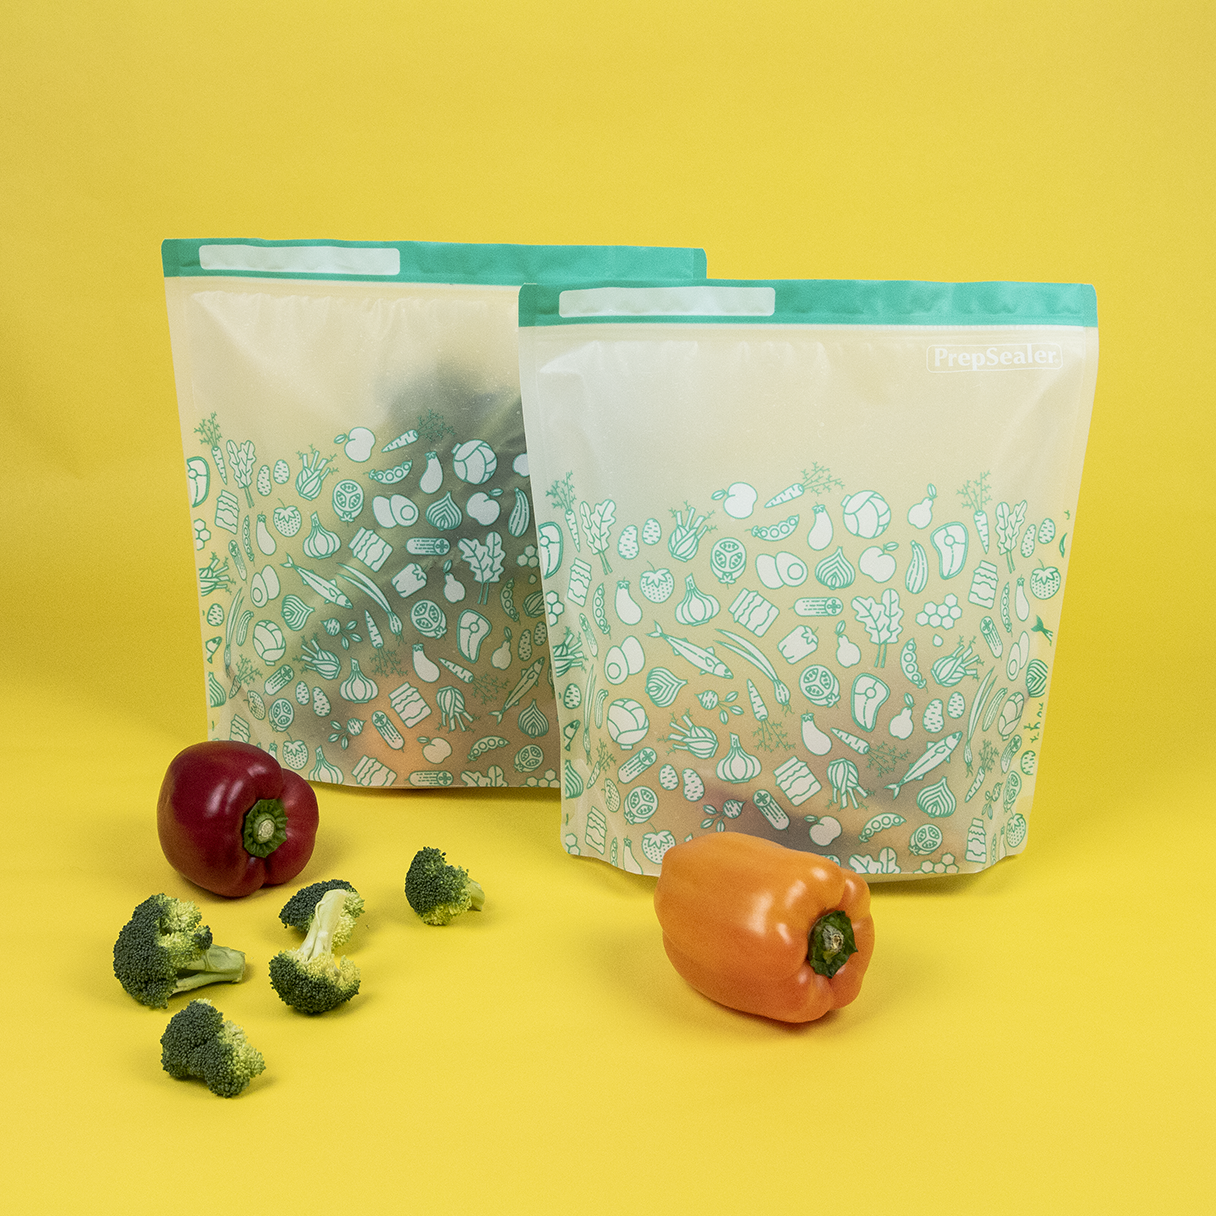 Food Saving Reusable Bag - Large 6PC